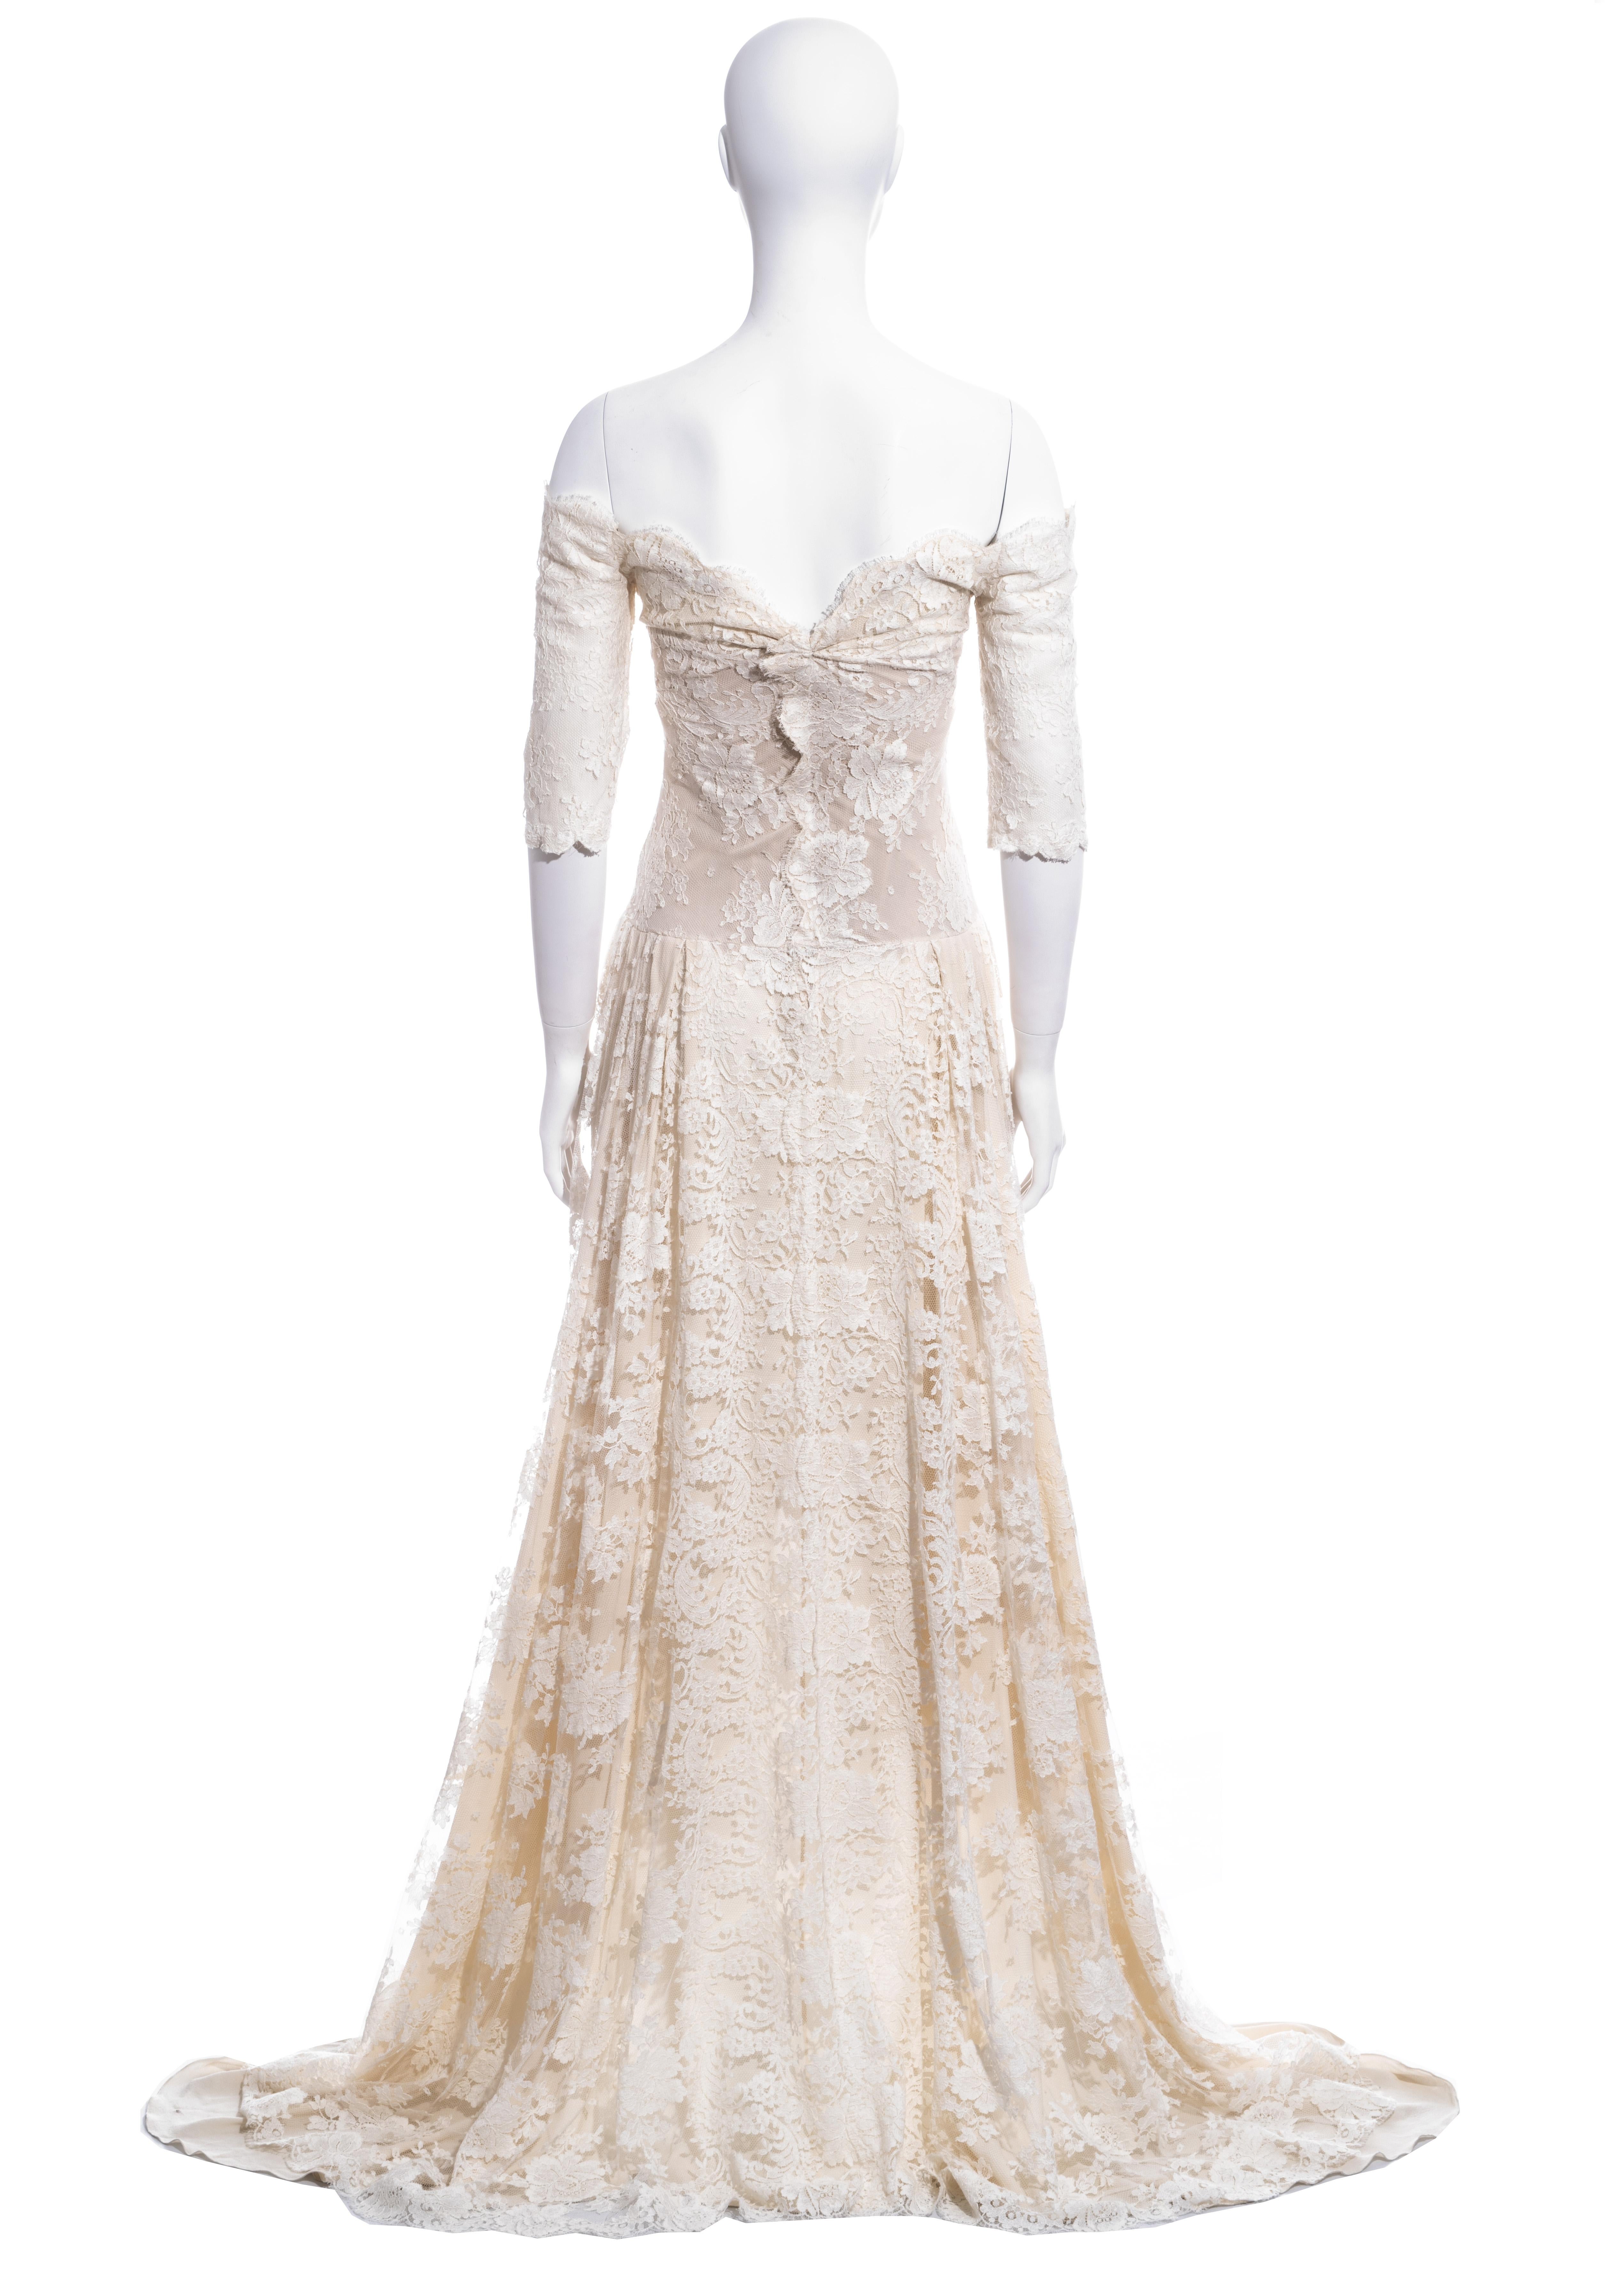 Beige Alexander McQueen ivory lace trained off-shoulder wedding dress, ss 2007